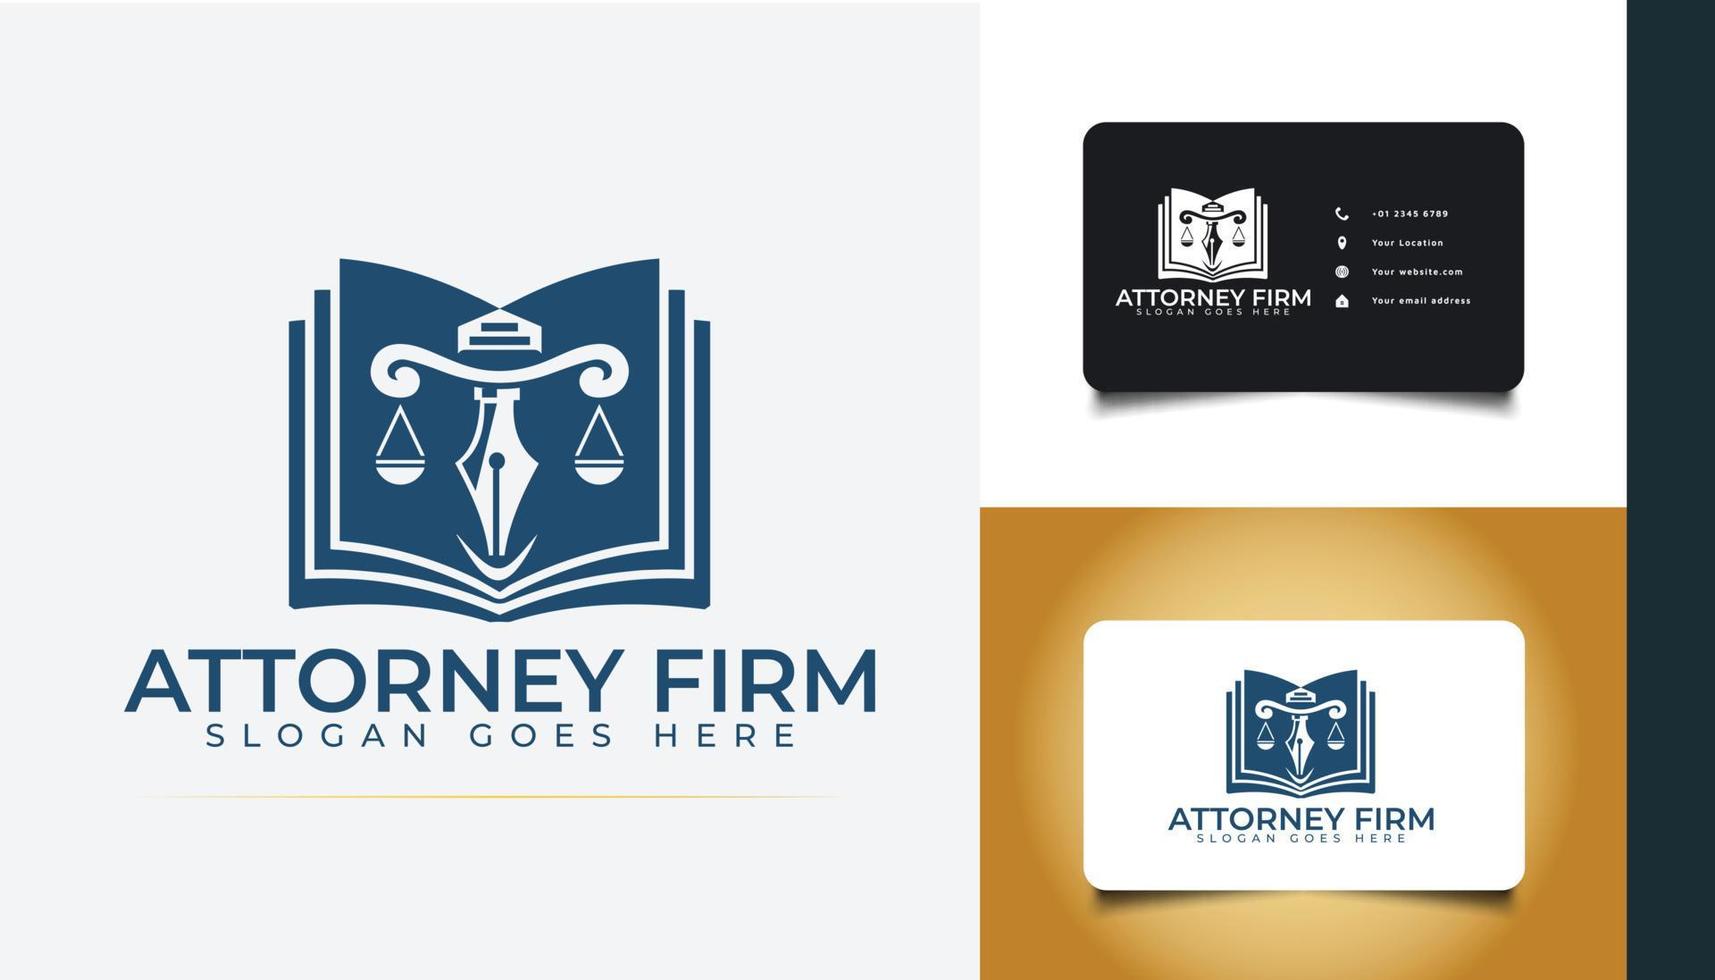 diseño de logotipo de bufete de abogados, plantilla de vector de logotipo de abogado